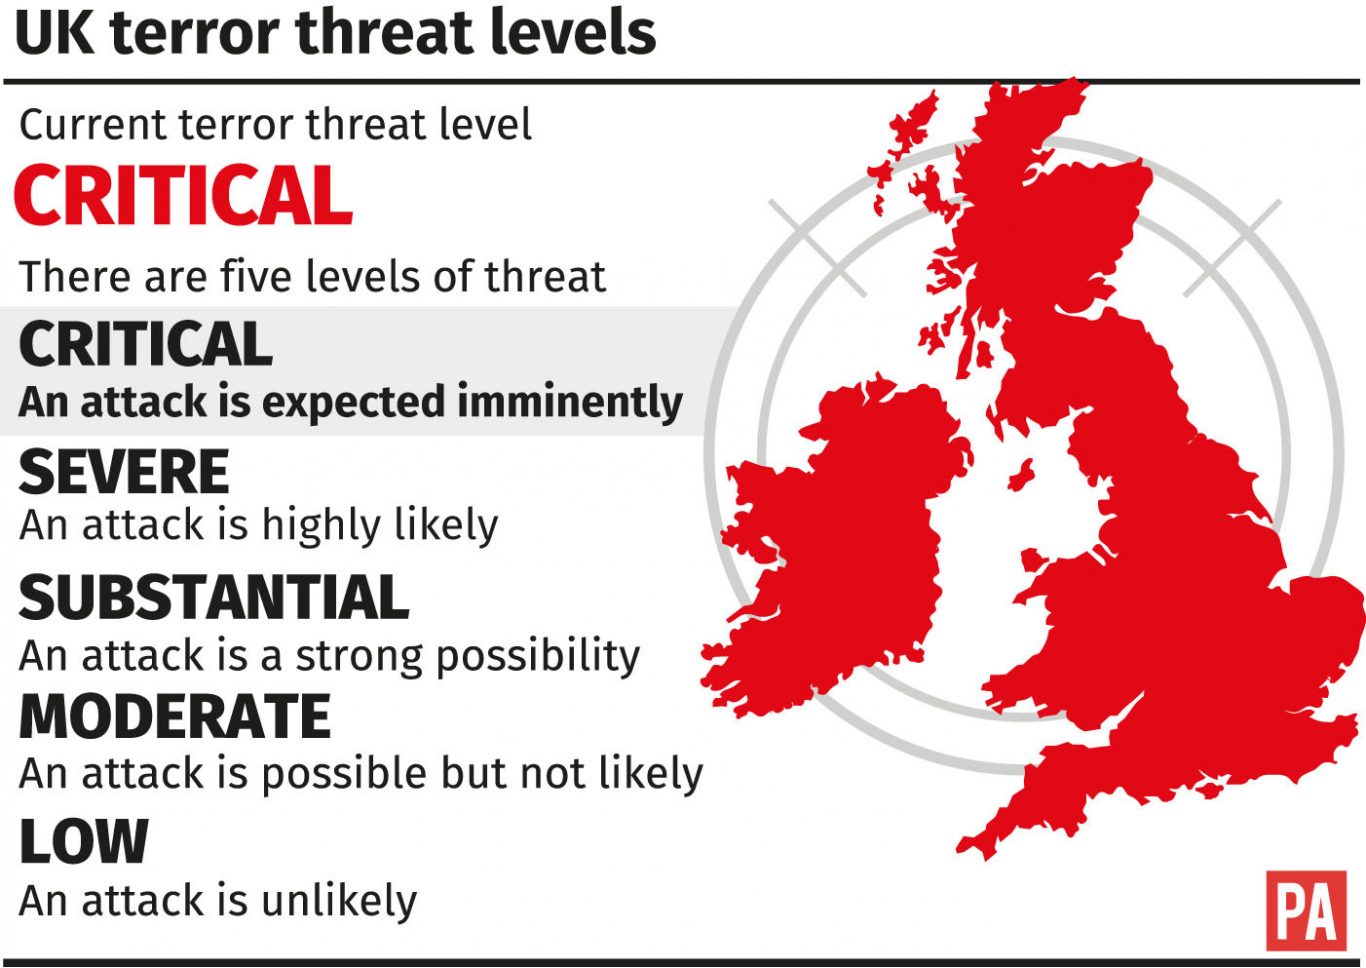 UK terror threat level raised to CRITICAL graphic